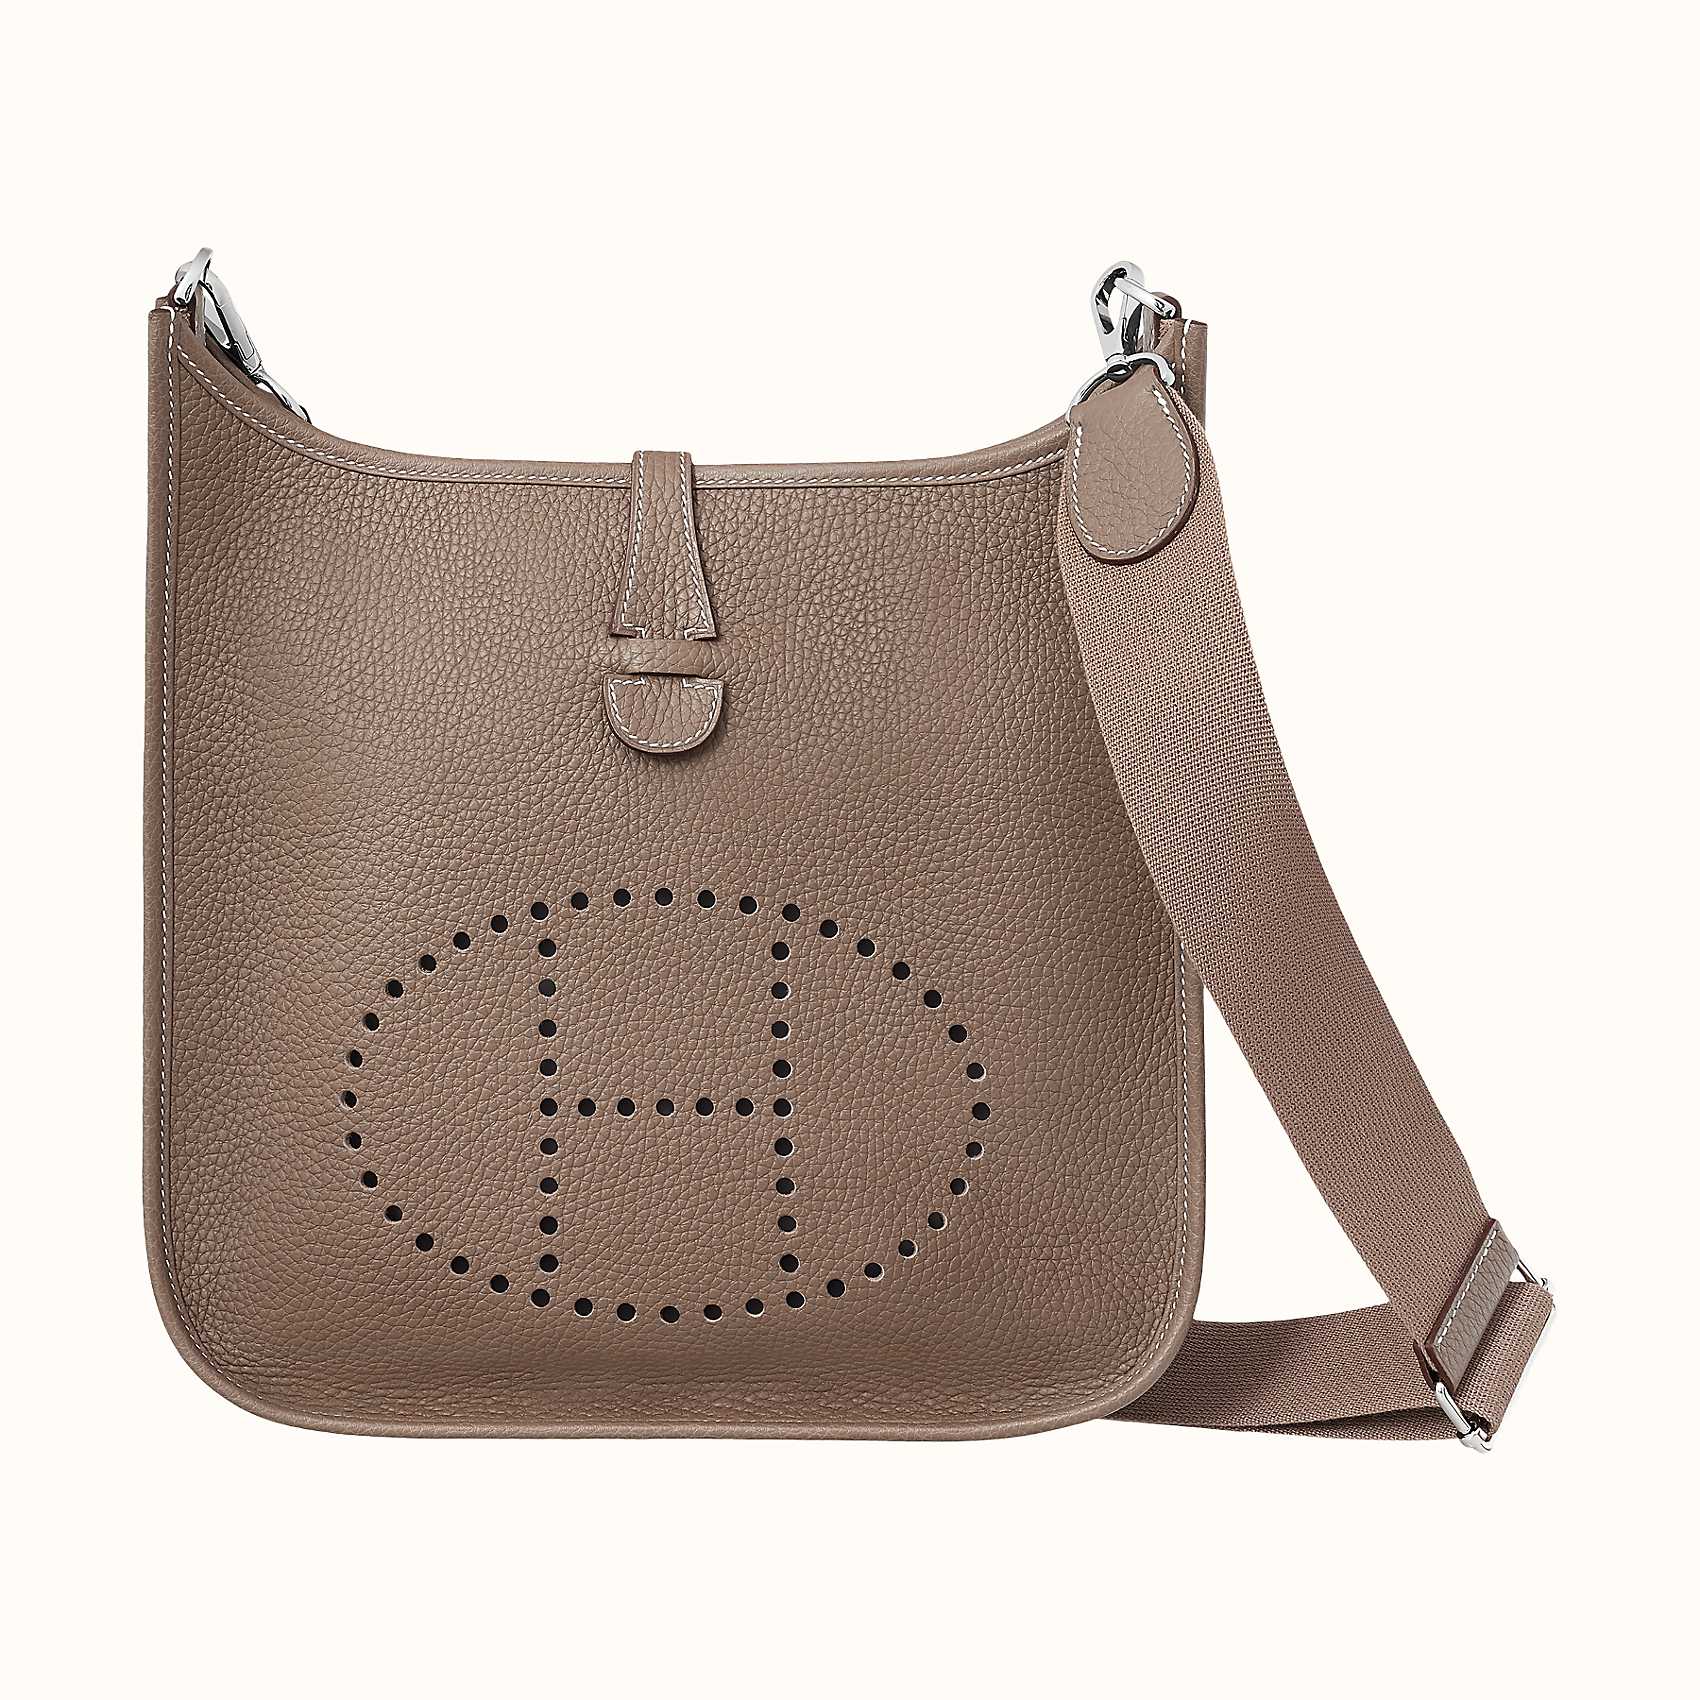 Designer Handbags: What Qualifies As An Entry-Level Designer Bag